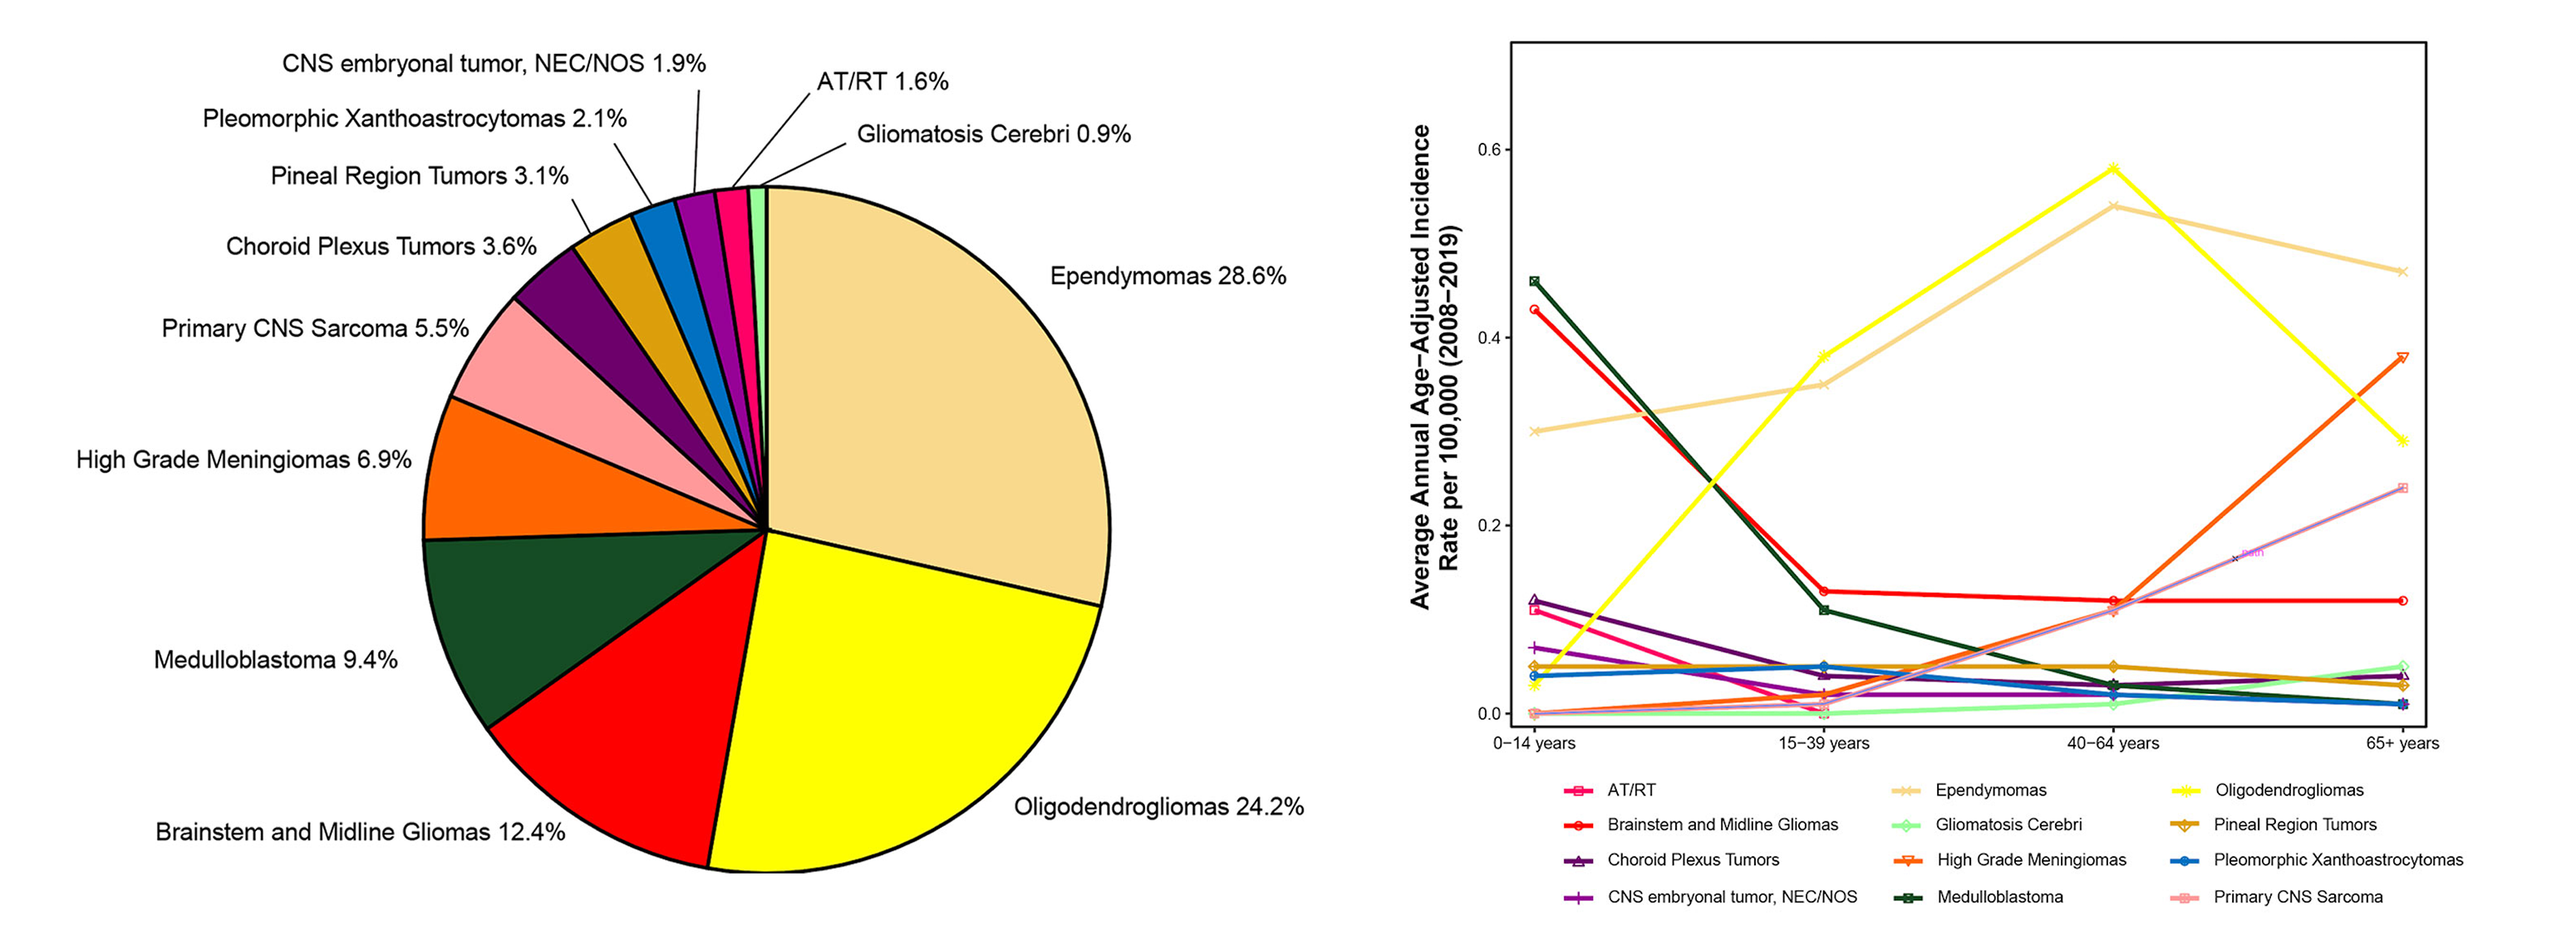 Two figures: 1. Pie chart showing the distribution of newly diagnosed cases by tumor type: Gliomatosis Cerebri (0.9%), AT/RT (1.6%), Primary CNS Sarcoma (5.5%), CNS embryonal tumor, NEC/NOS (1.9%); Pleomorphic Xanthoastrocytomas (2.1%); Pineal Region Tumors (3.1%); Choroid Plexus Tumors (3.6%); Brainstem and Midline Gliomas (12.4%); High Grade Meningiomas (6.9%); Medulloblastoma; (9.4%) Oligodendrogliomas (24.2%); Ependymomas (28.6%). 2. A line graph with Average Annual Age-Adjusted Incidence Rate per 100,0